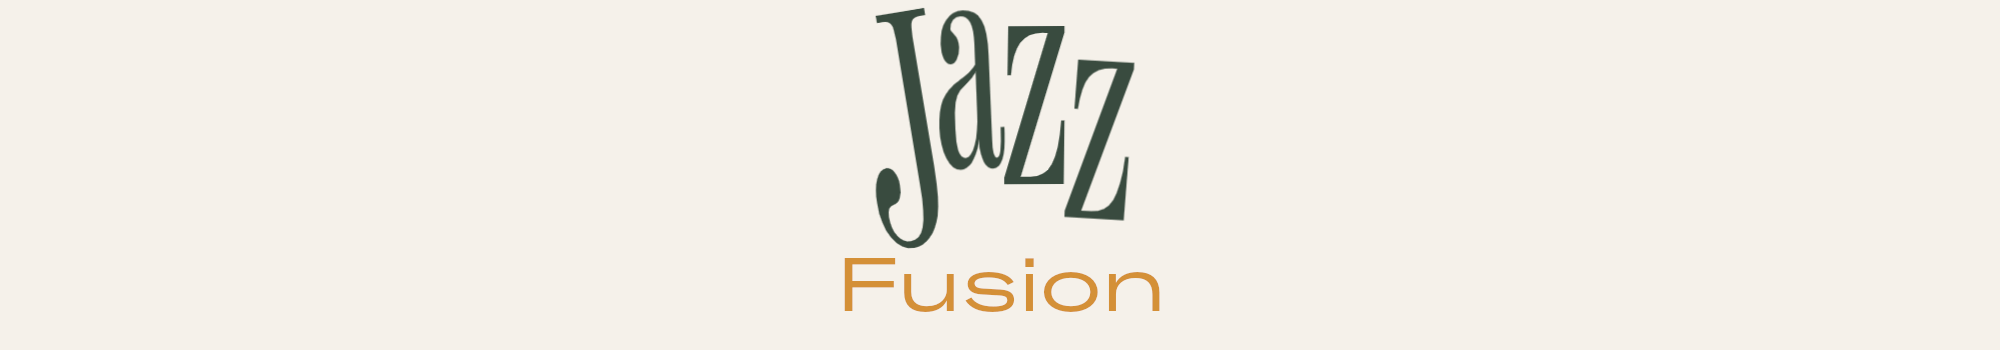 Rubrik till kategori: Jazz - Fusion